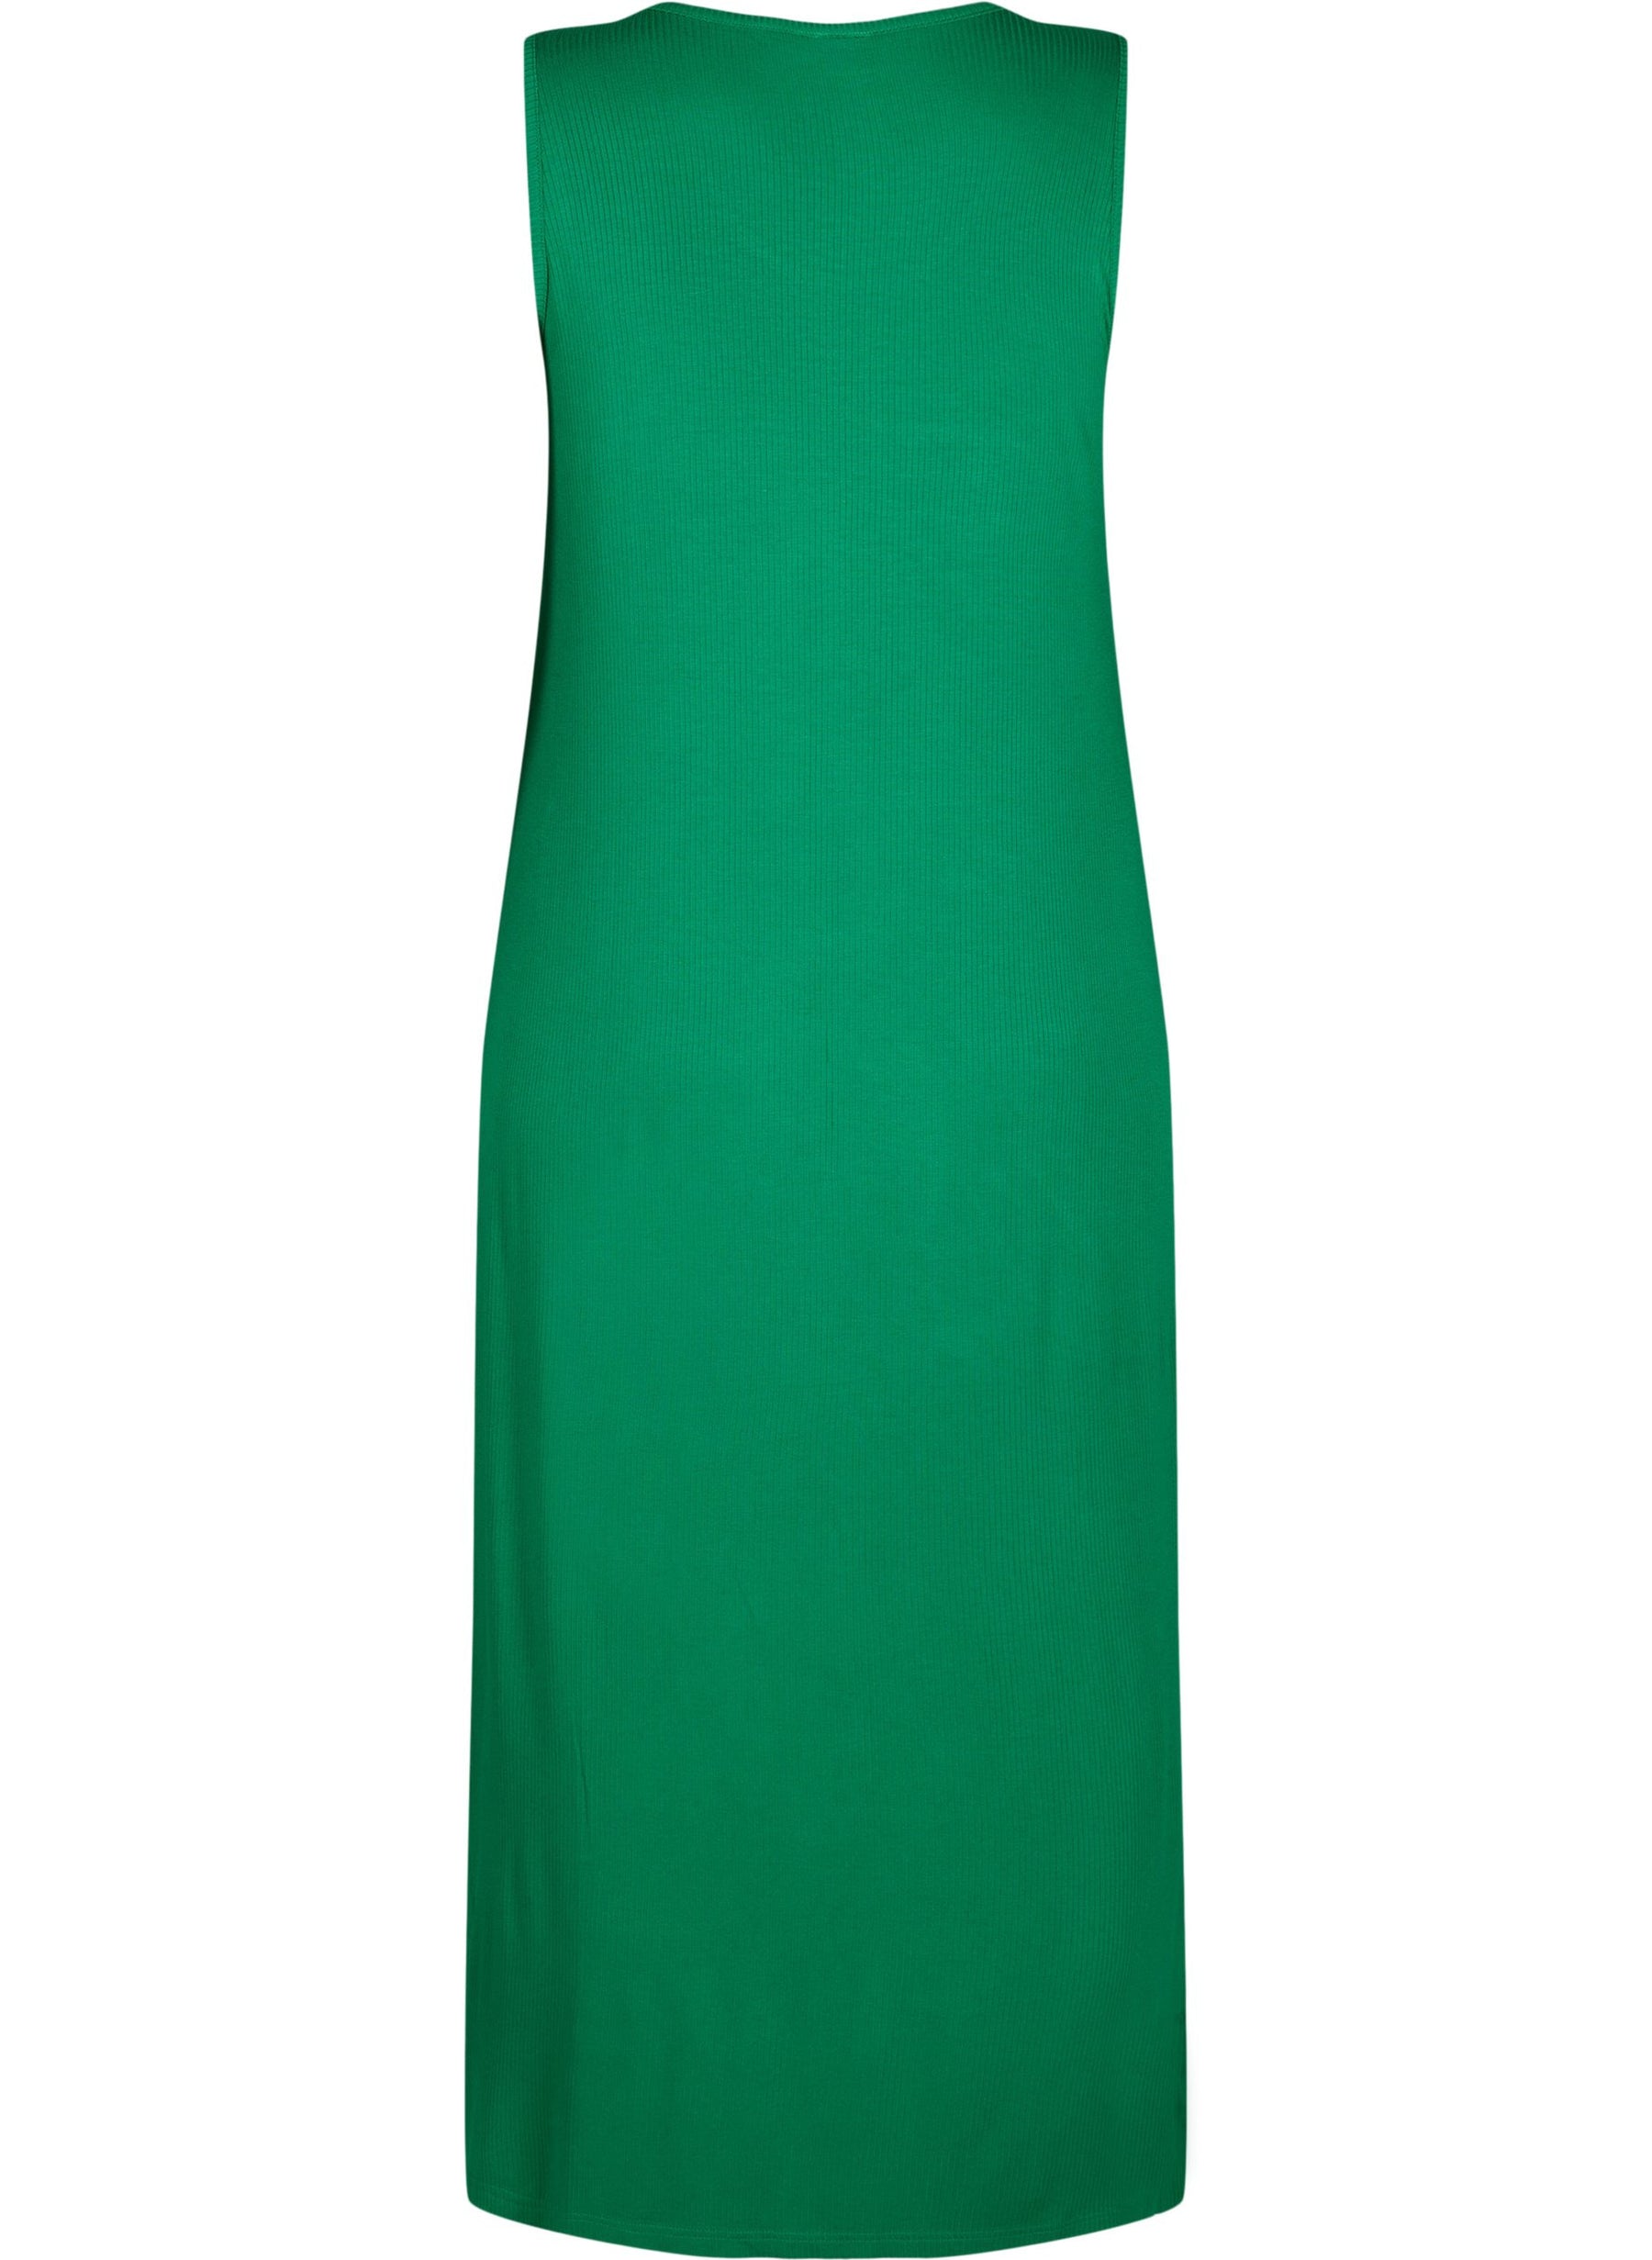 Zizzi Sleeveless Carly Dress in Green